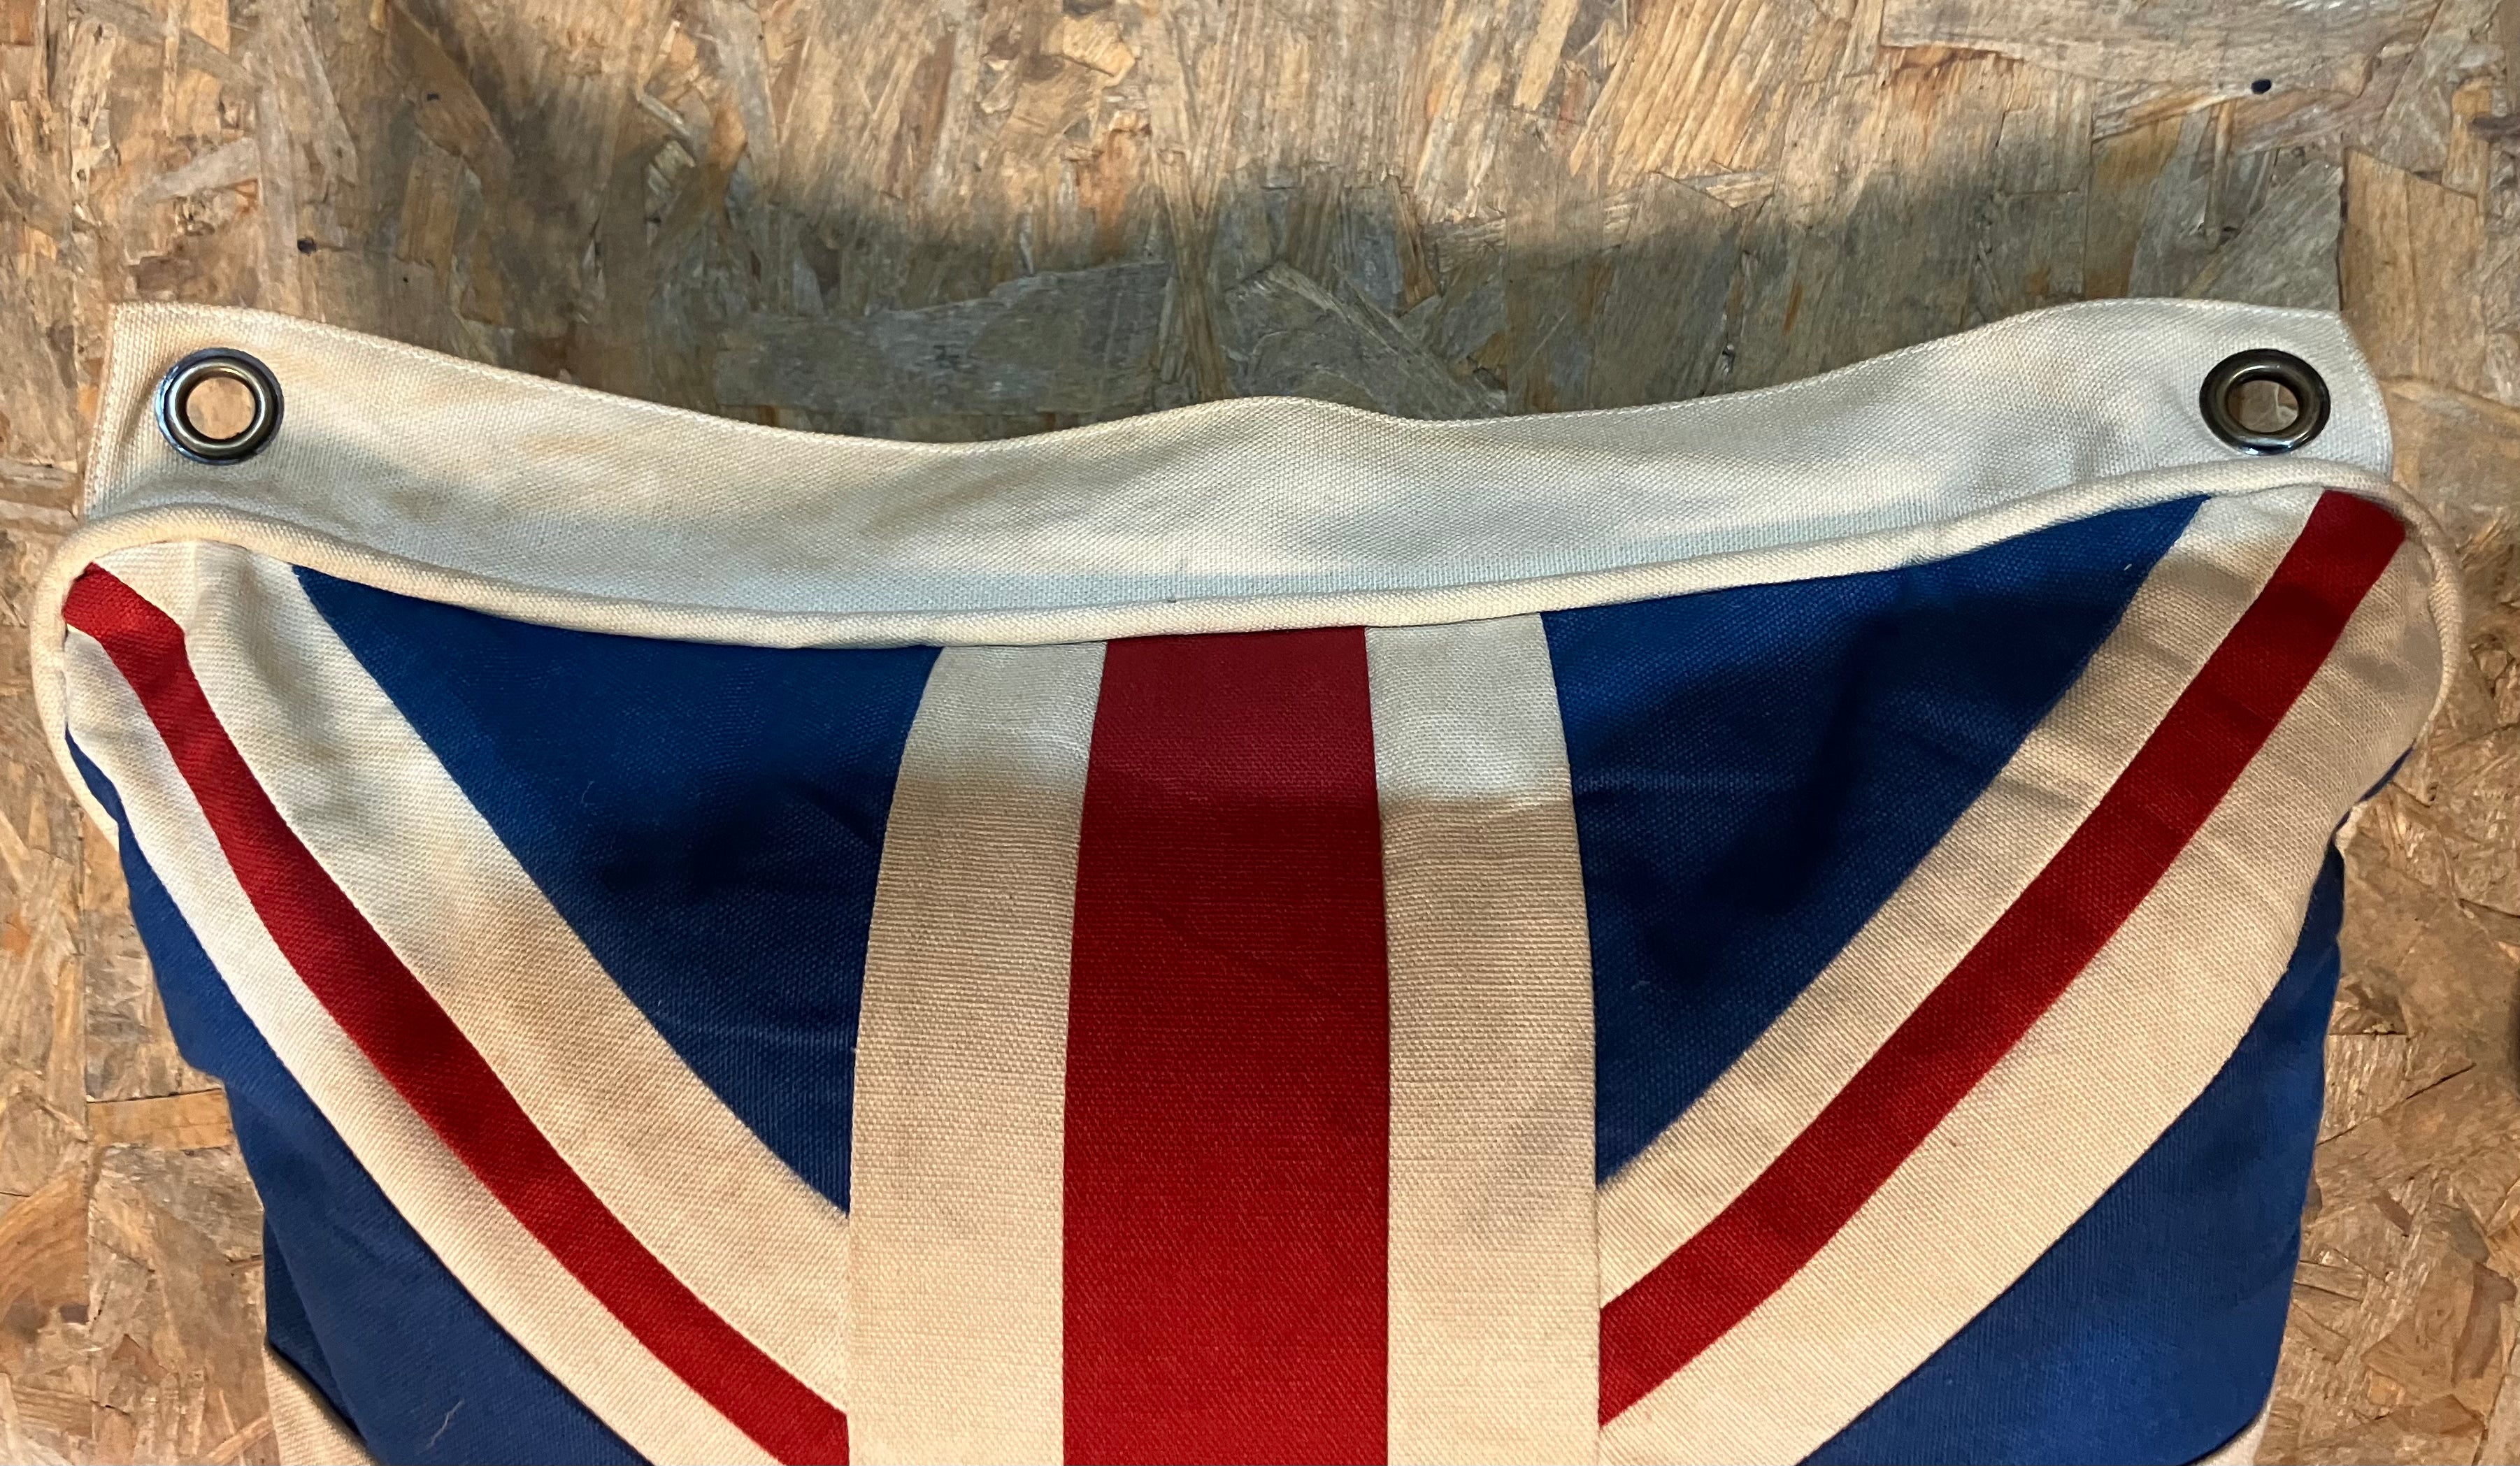 Stunning 100% Cotton Tea Stain Vintage Union Jack Canvas Flag Square cushion